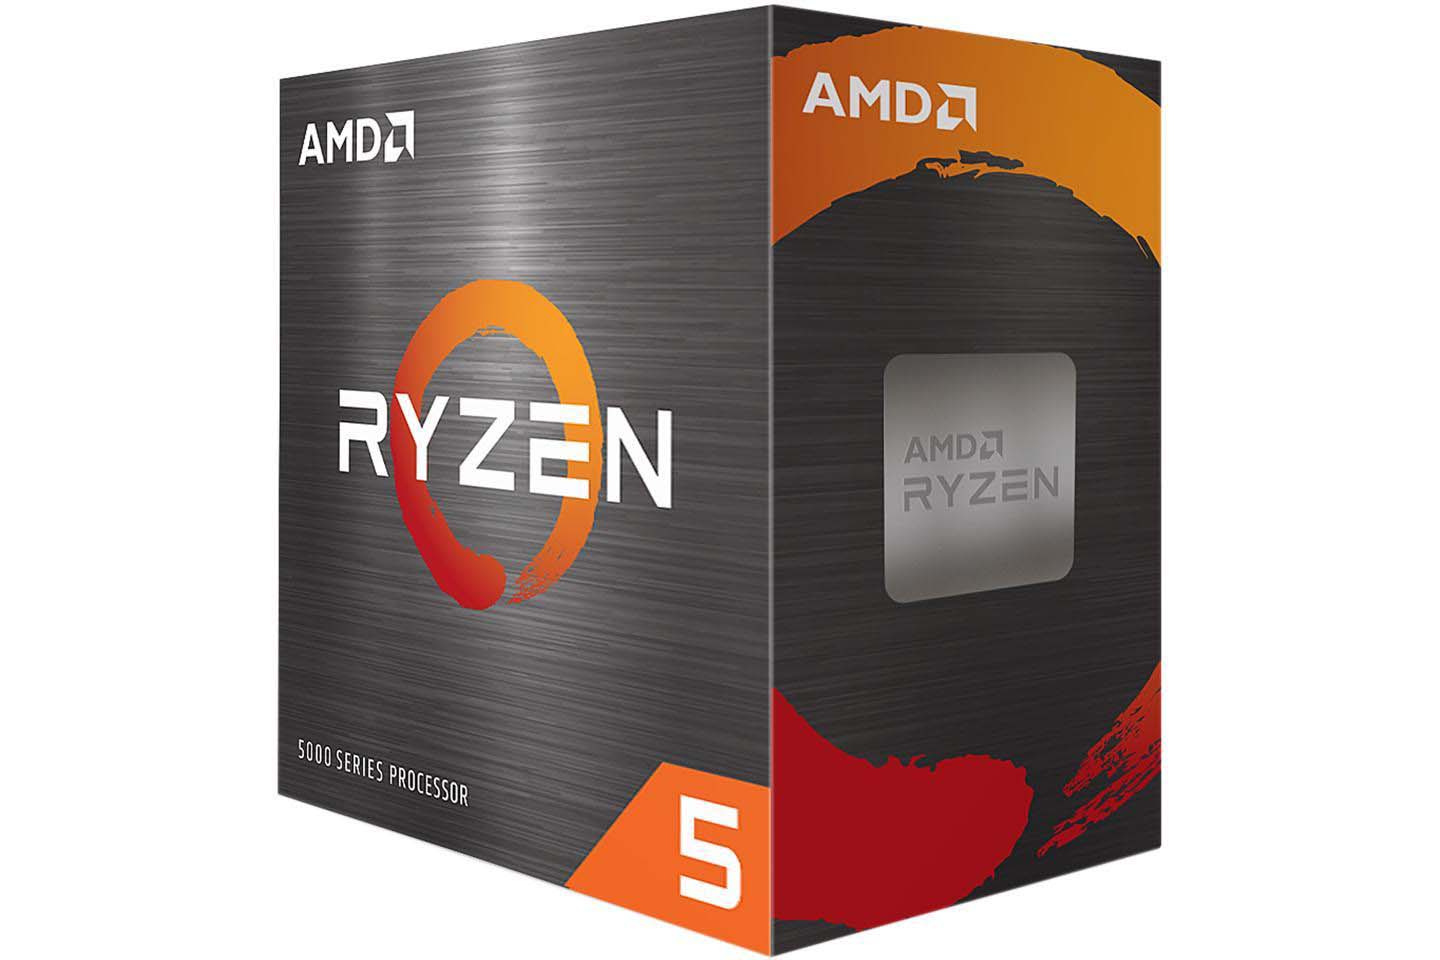  The best Ryzen CPU: Which Ryzen processor should you buy?